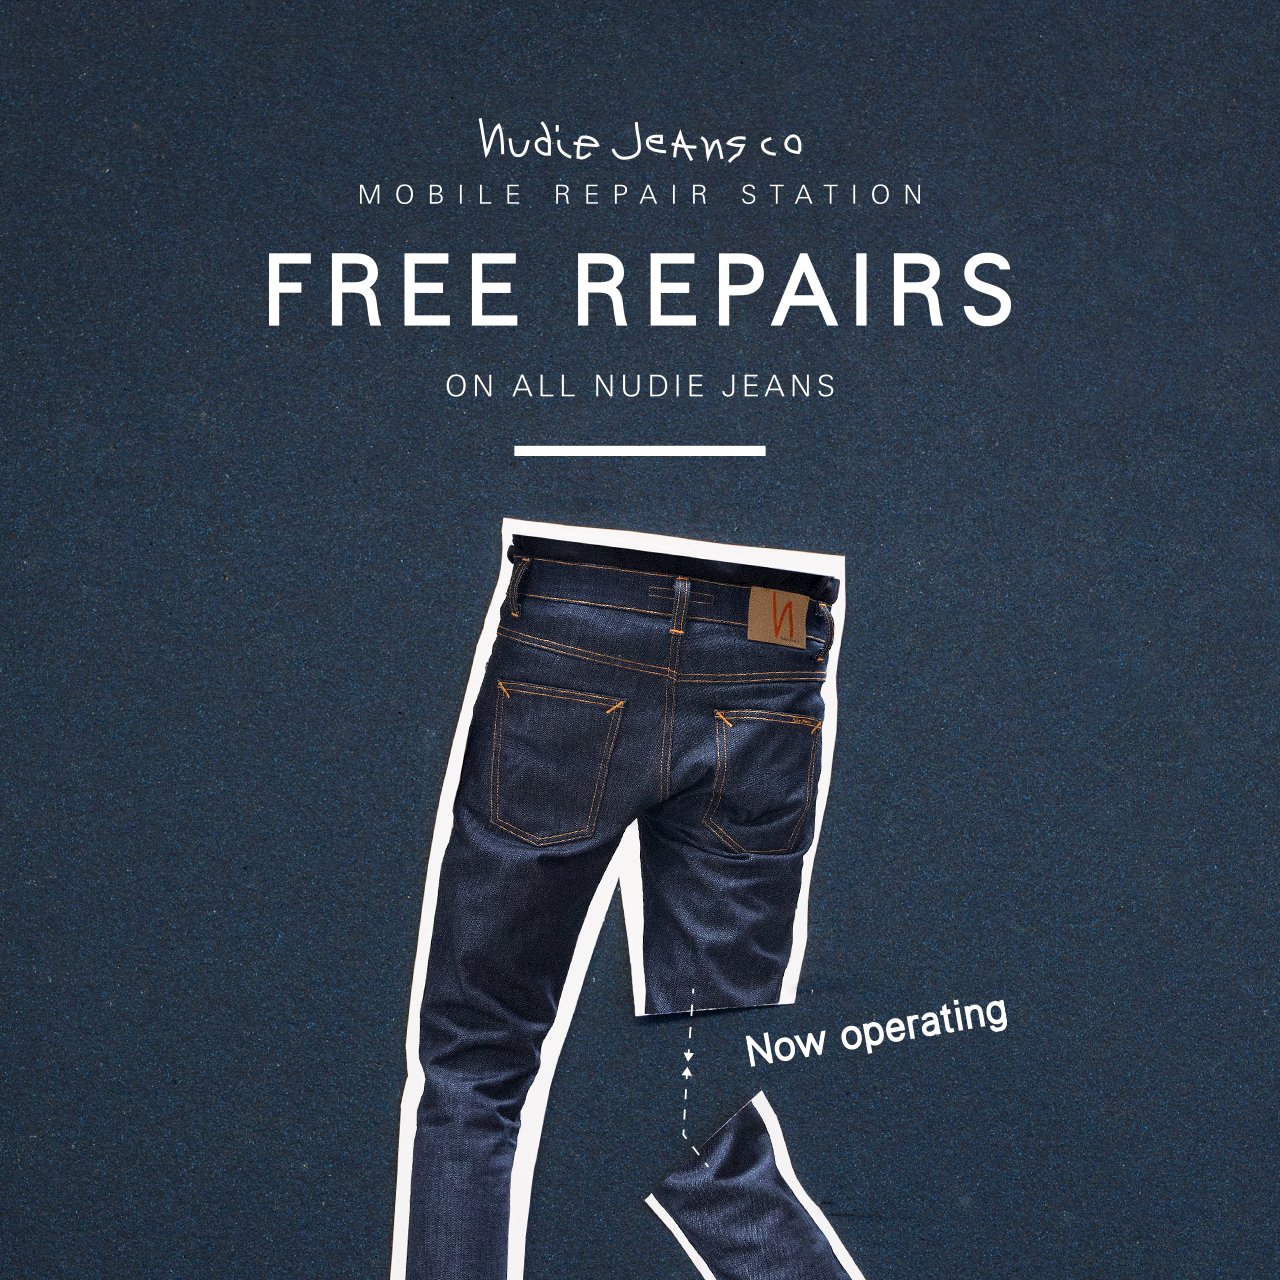 aphrodite apparel jeans